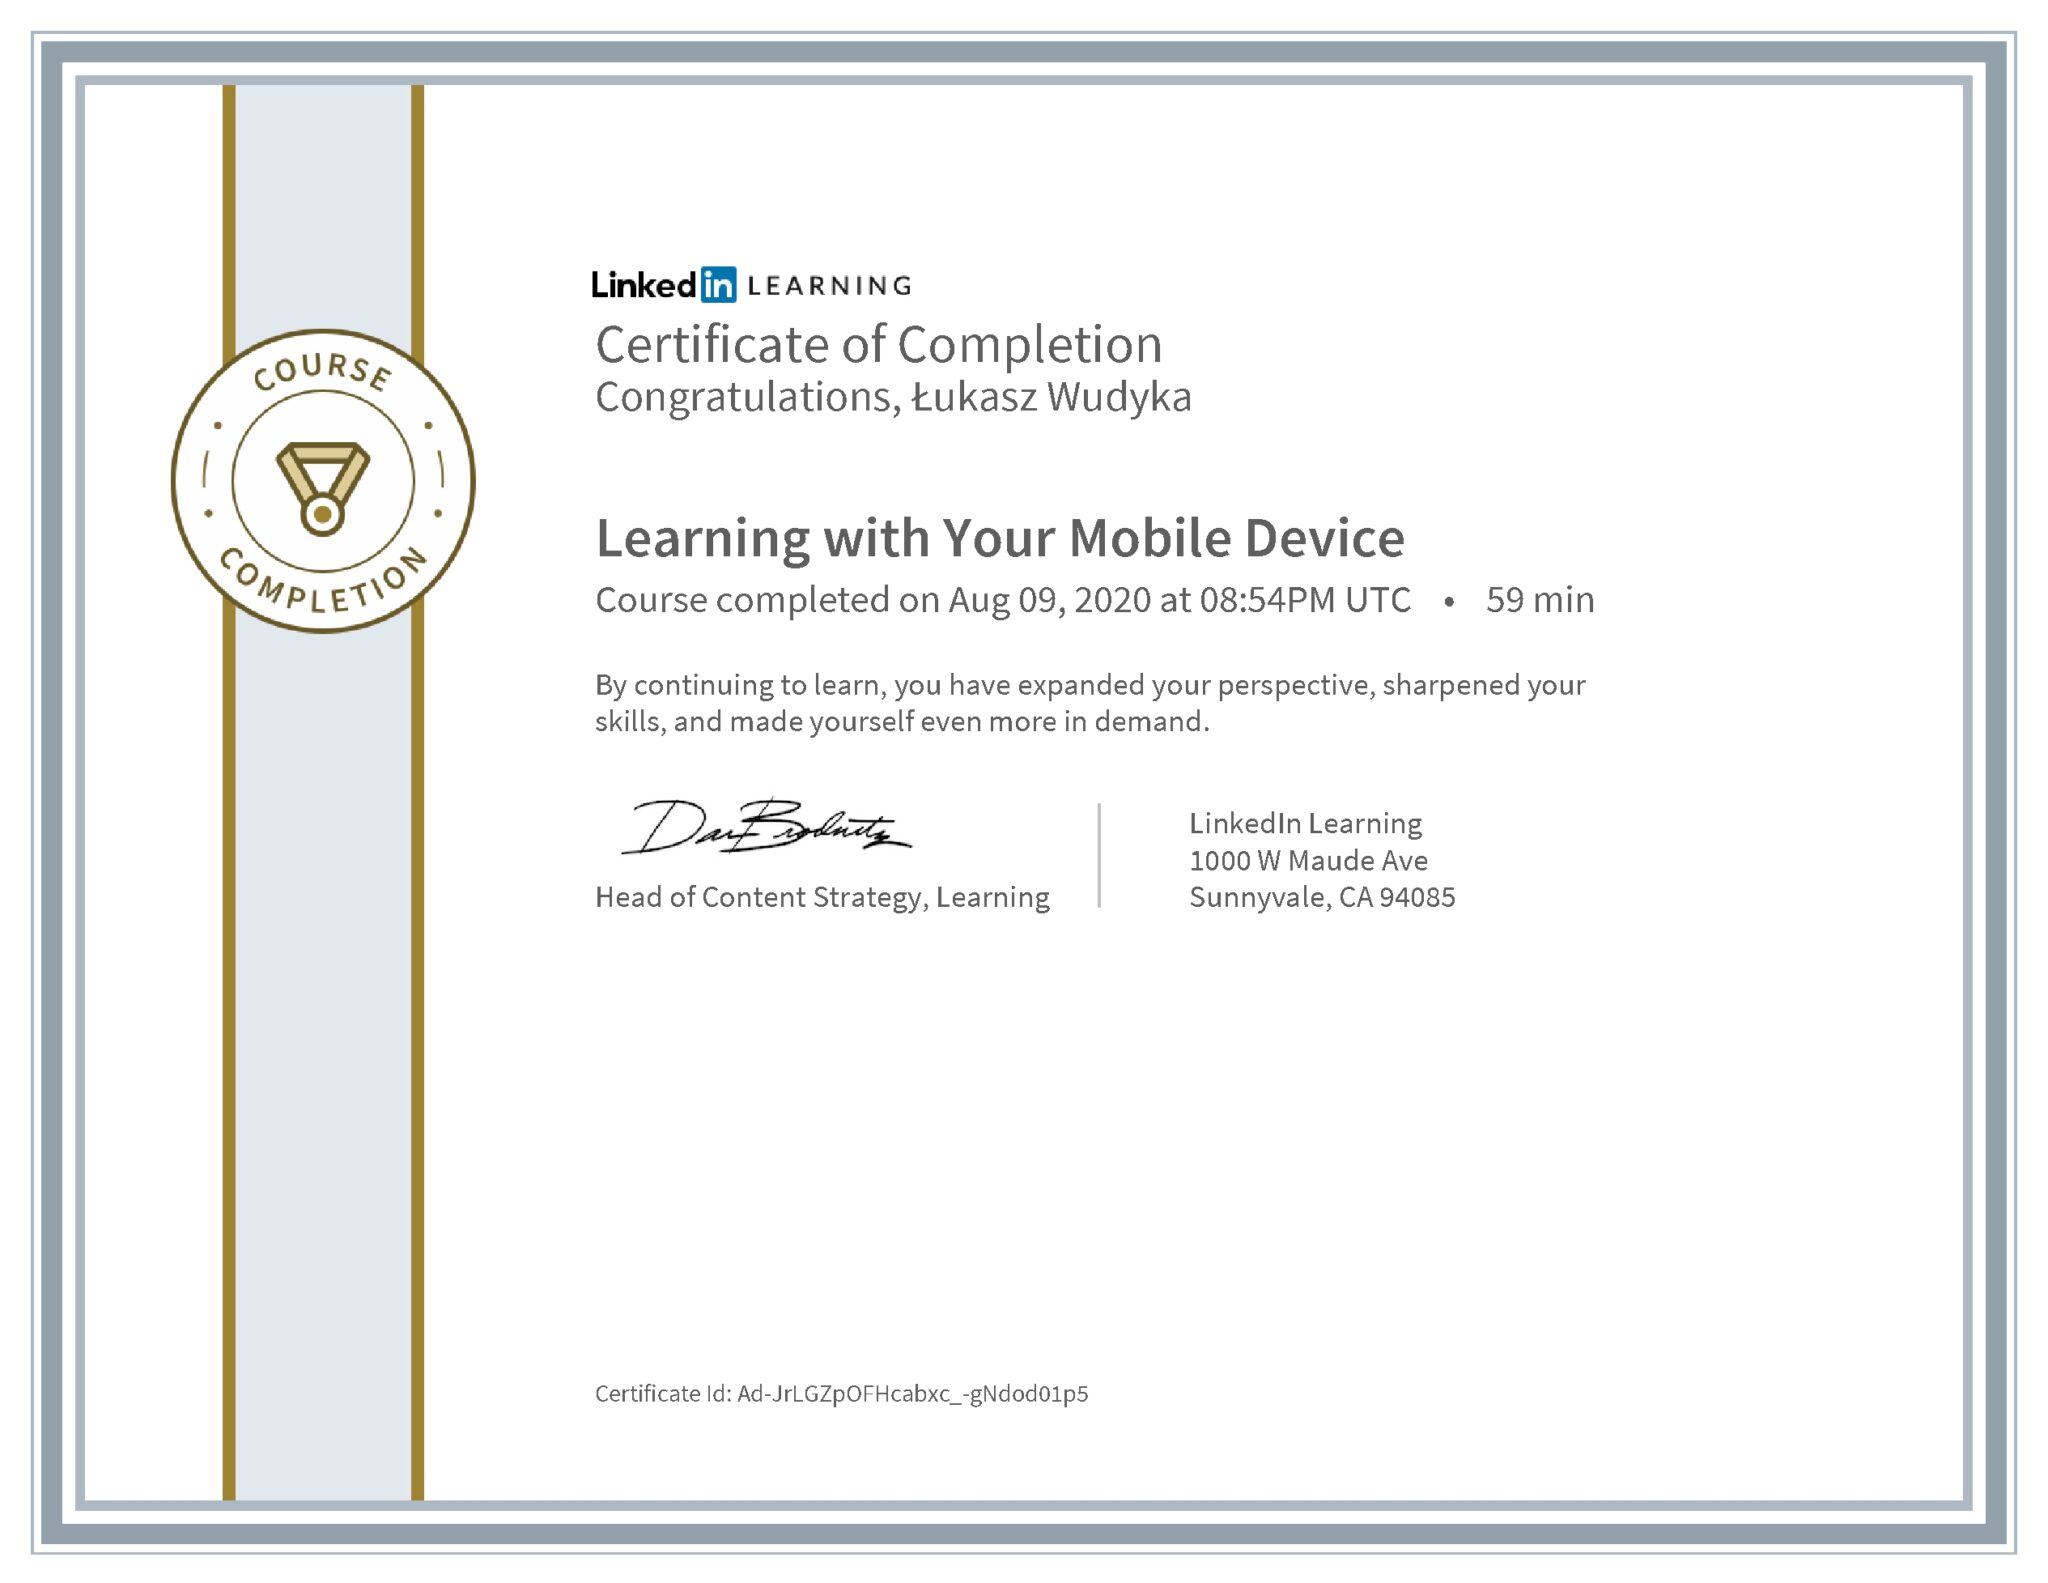 Łukasz Wudyka certyfikat LinkedIn Learning with Your Mobile Device